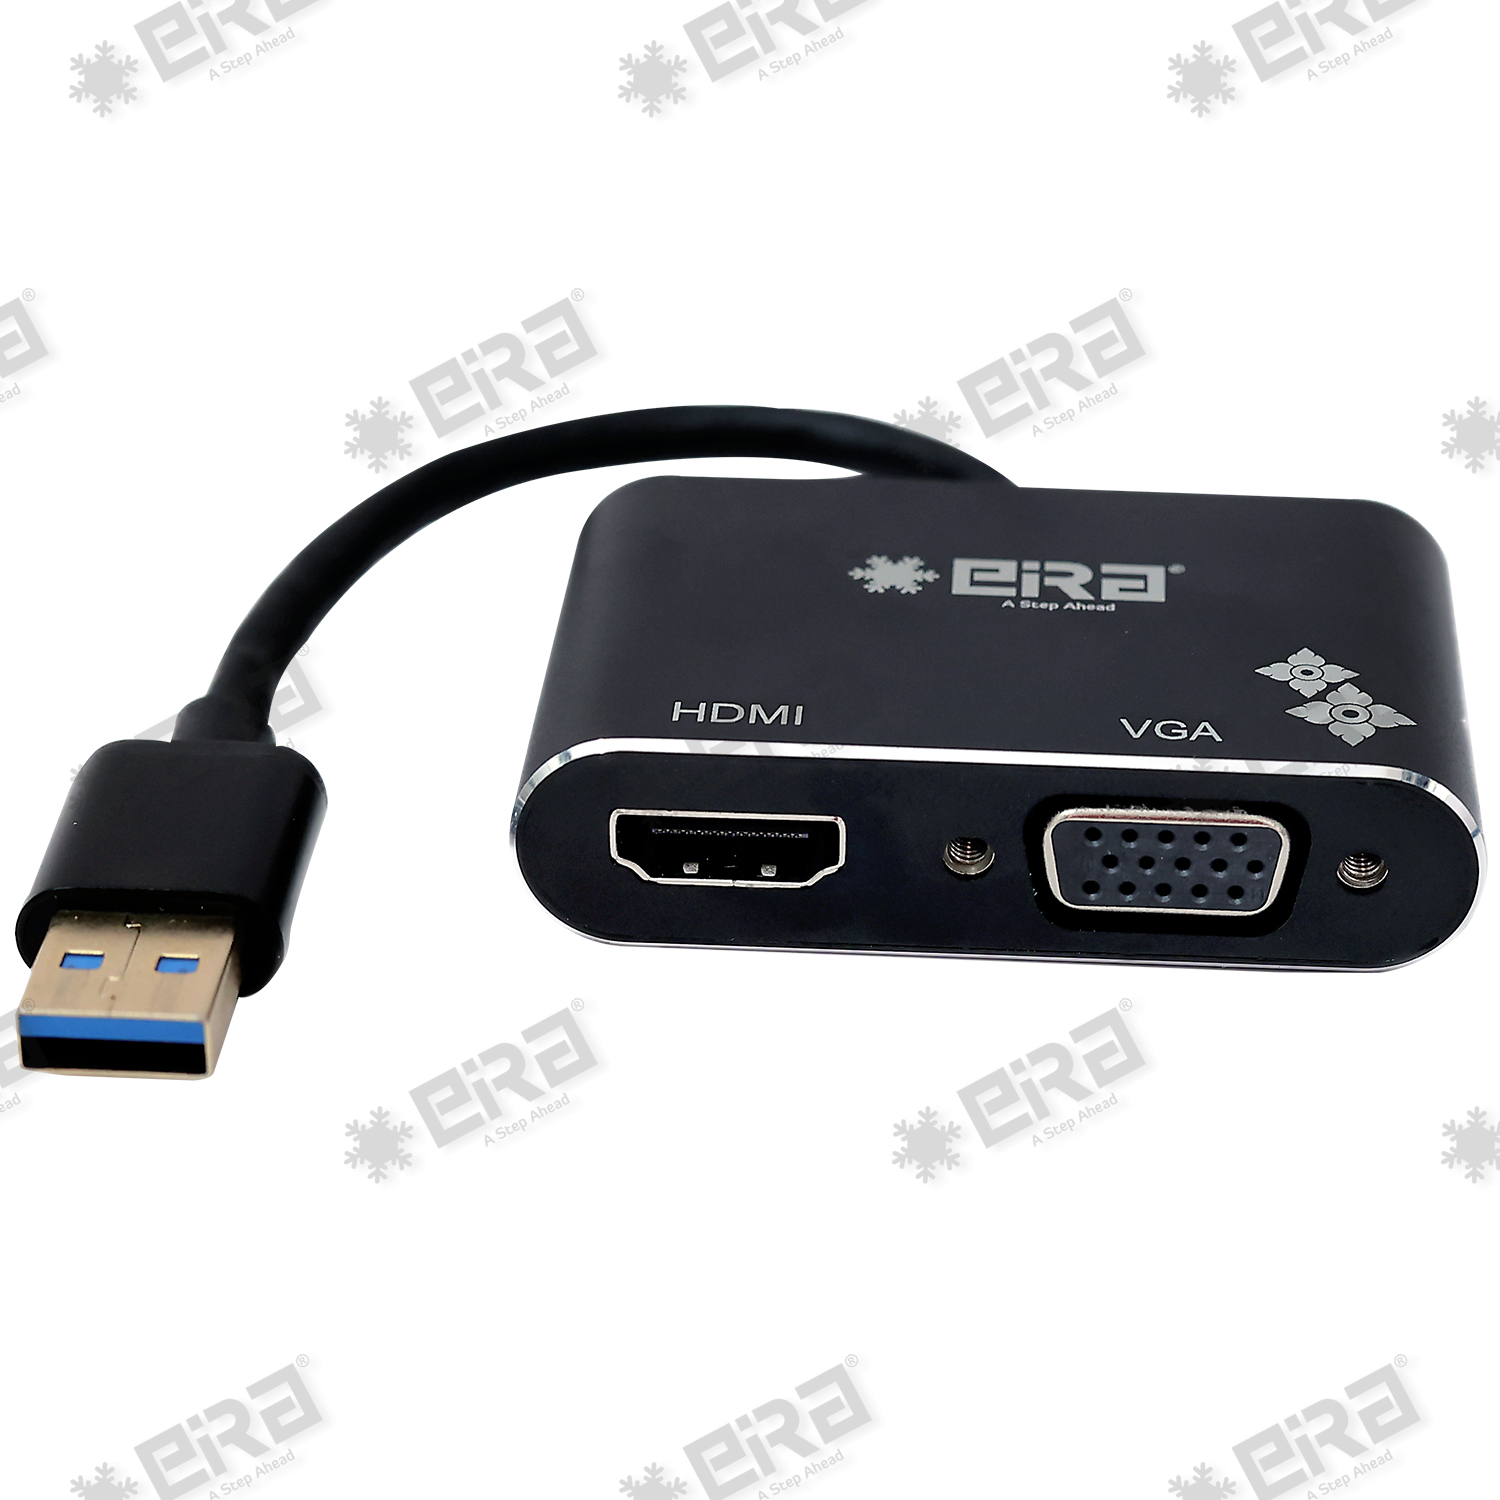 Adaptateur USB 3.0 vers VGA-HDMI - YaYi Business